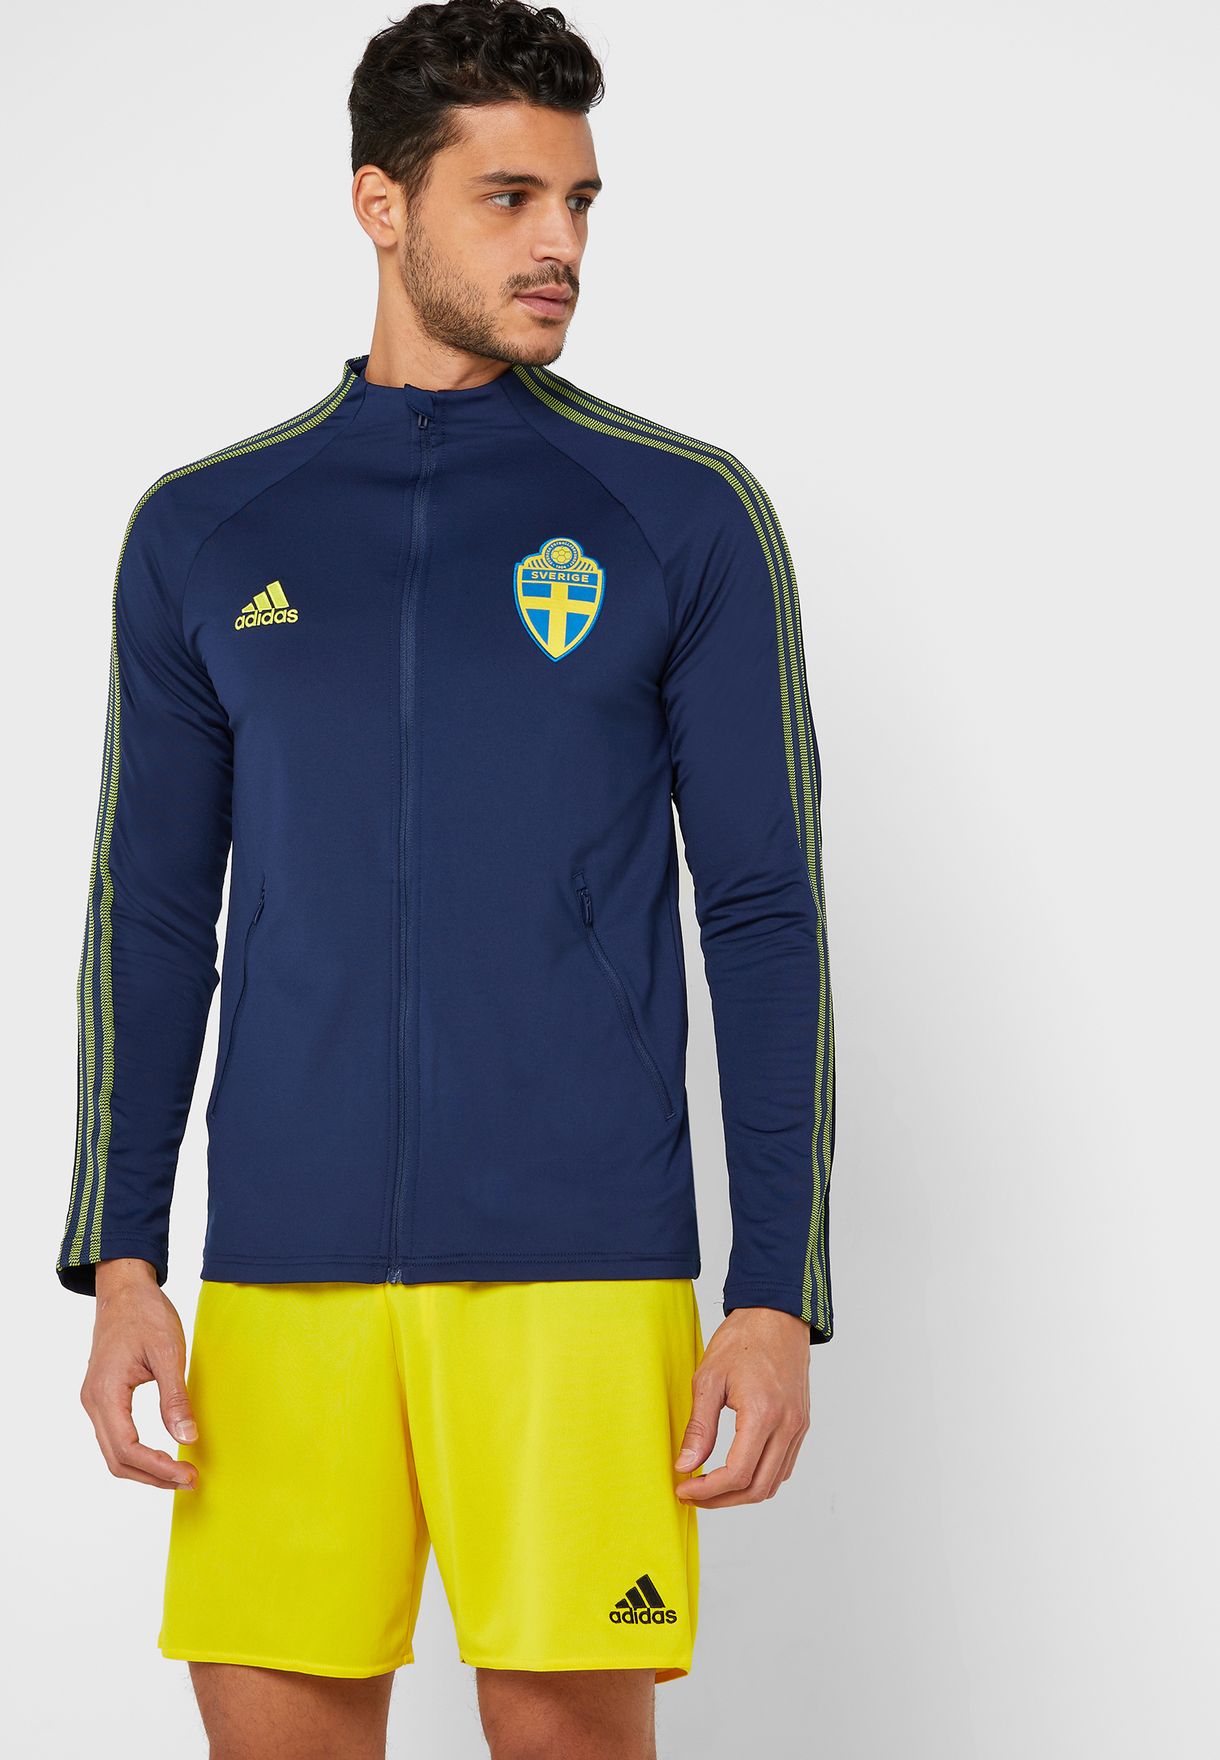 adidas sweden jacket